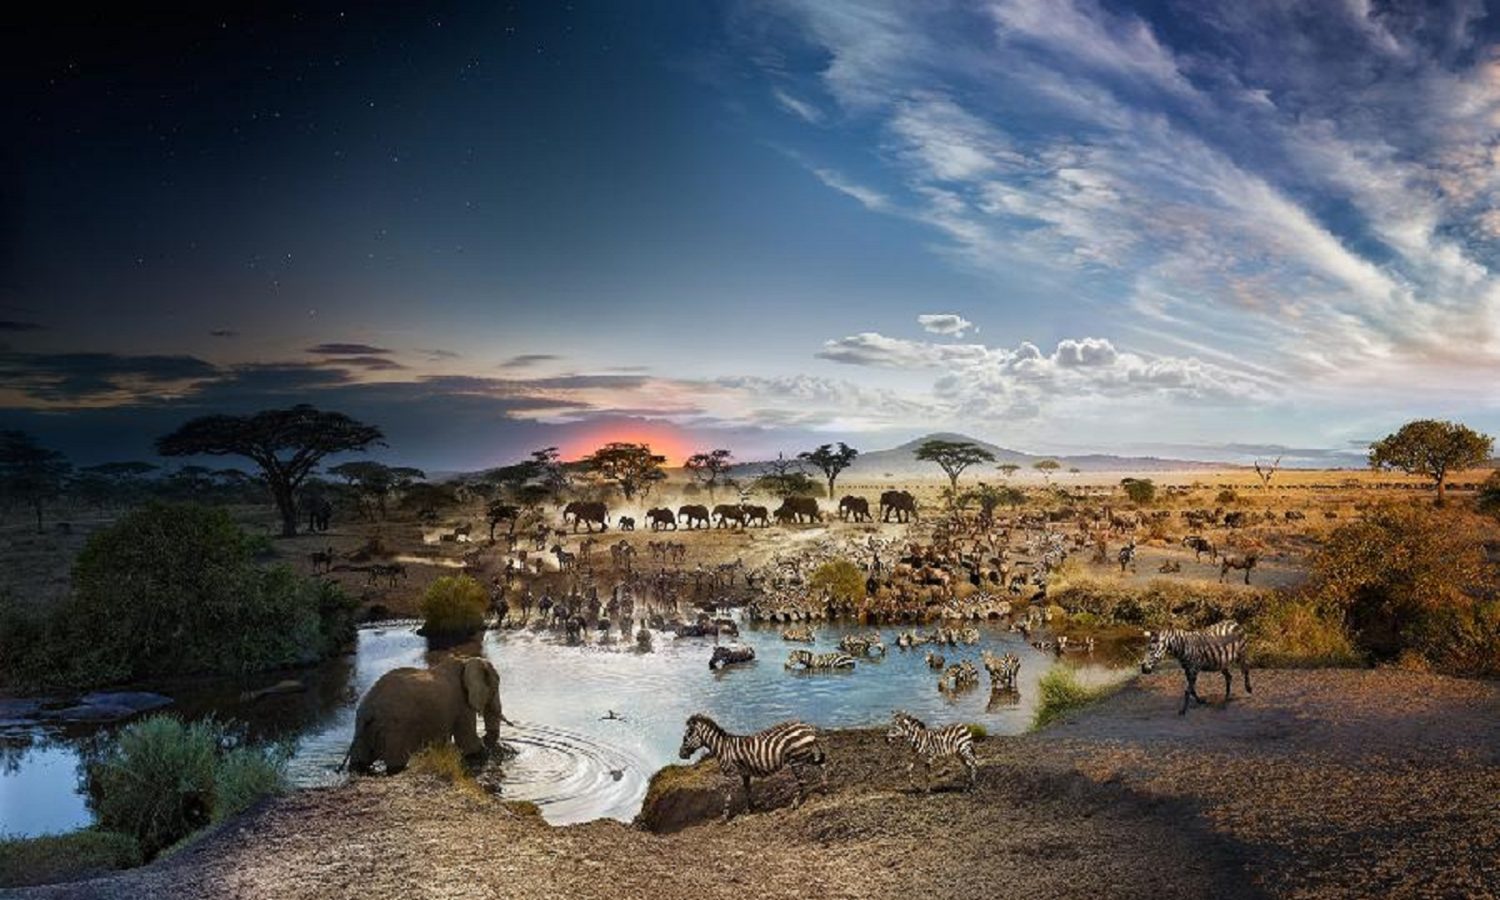 Stephen Wilkes' photos ,Day to night, 2015,Serengeti National Park, Tanzania, Stephen Wilkes' Photos